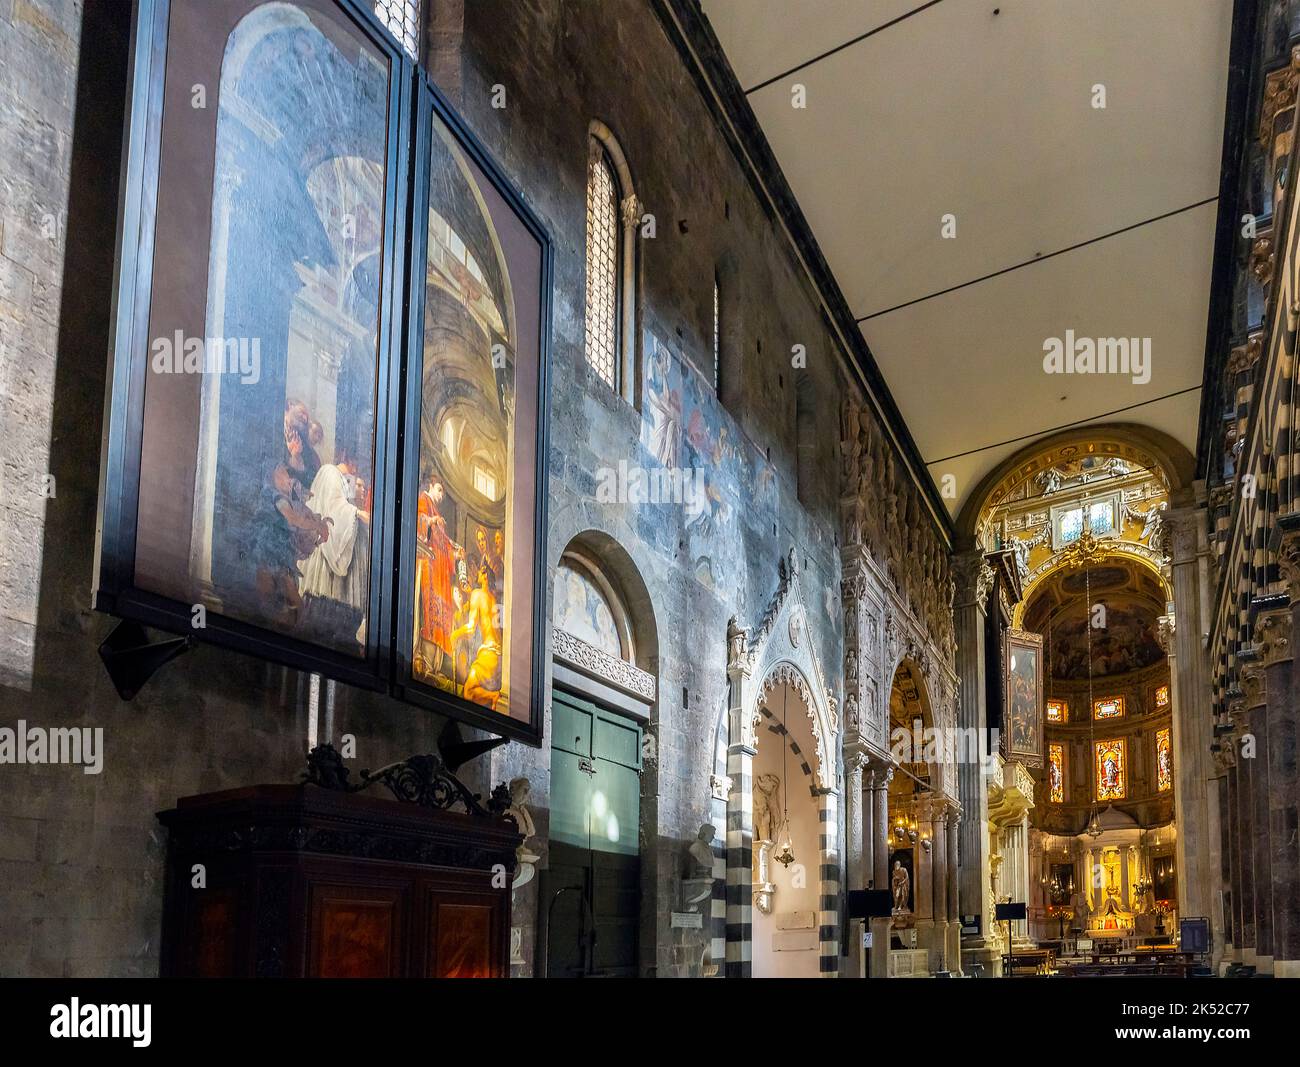 Interior of Genoa Cathedral or Metropolitan Cathedral of Saint Lawrence, Genoa. Genova is capital of Liguria region, Italy. Stock Photo